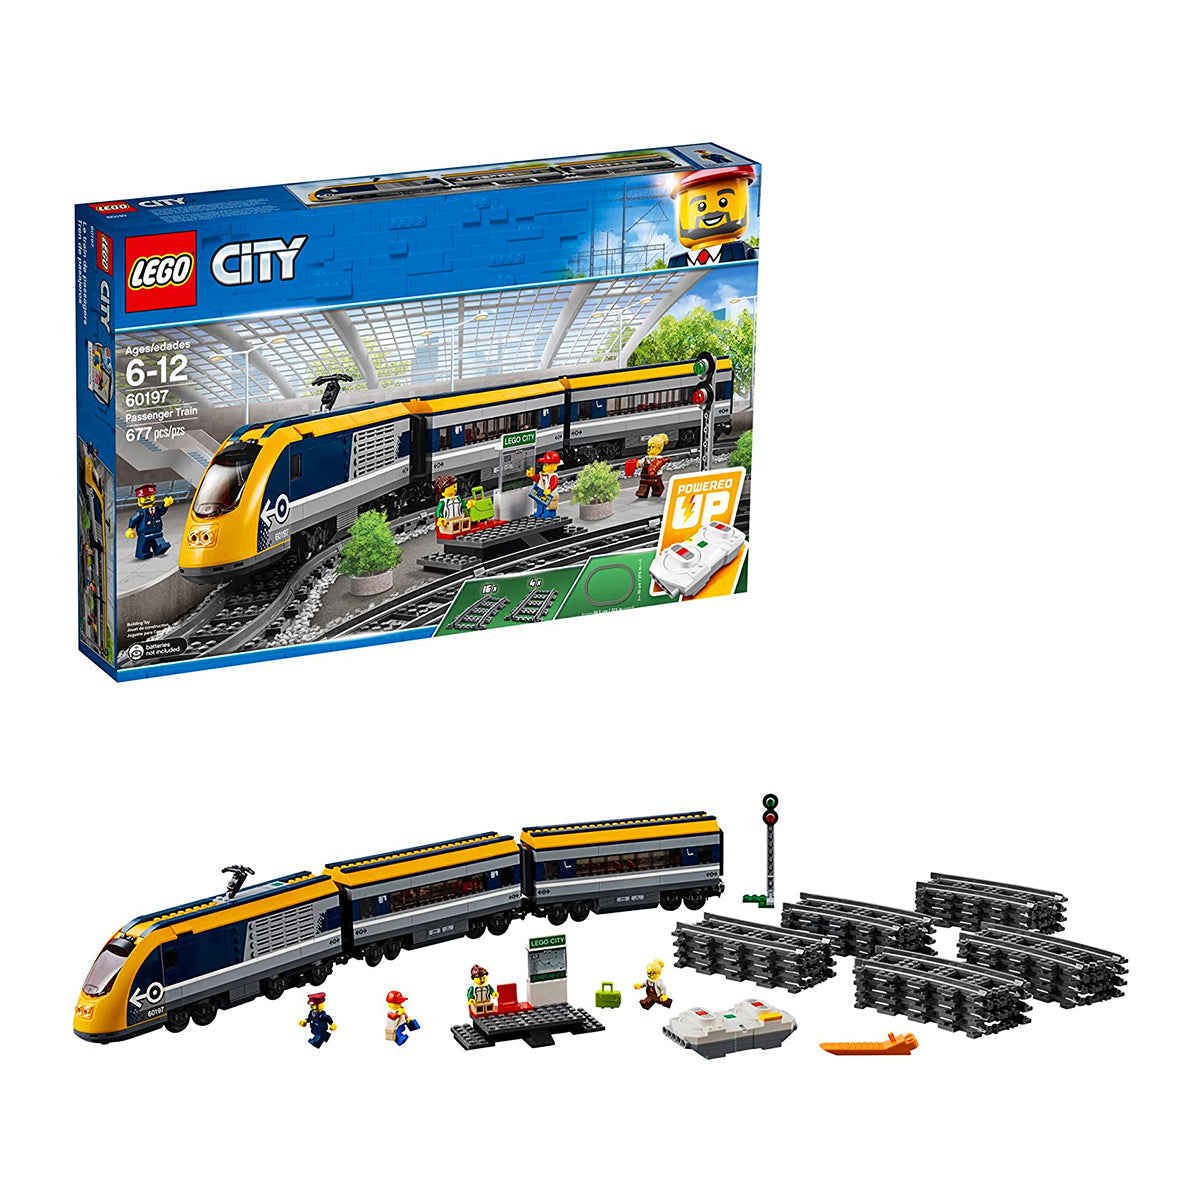 LEGO City - Passenger Train 60197